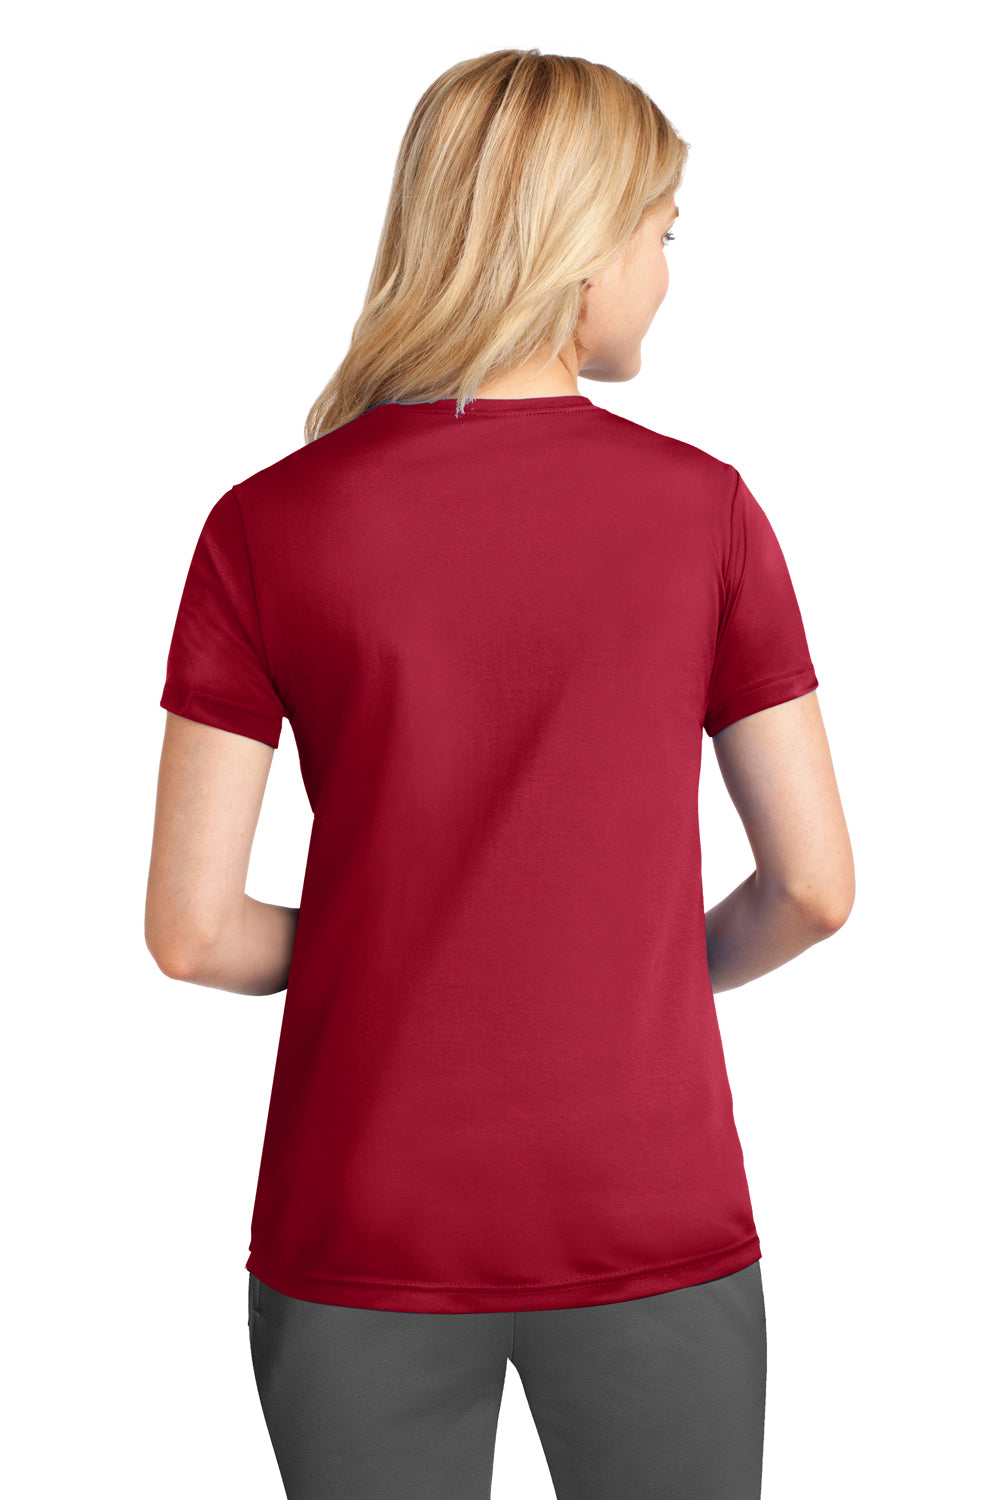 Port & Company LPC380 Womens Dry Zone Performance Moisture Wicking Short Sleeve Crewneck T-Shirt Red Back